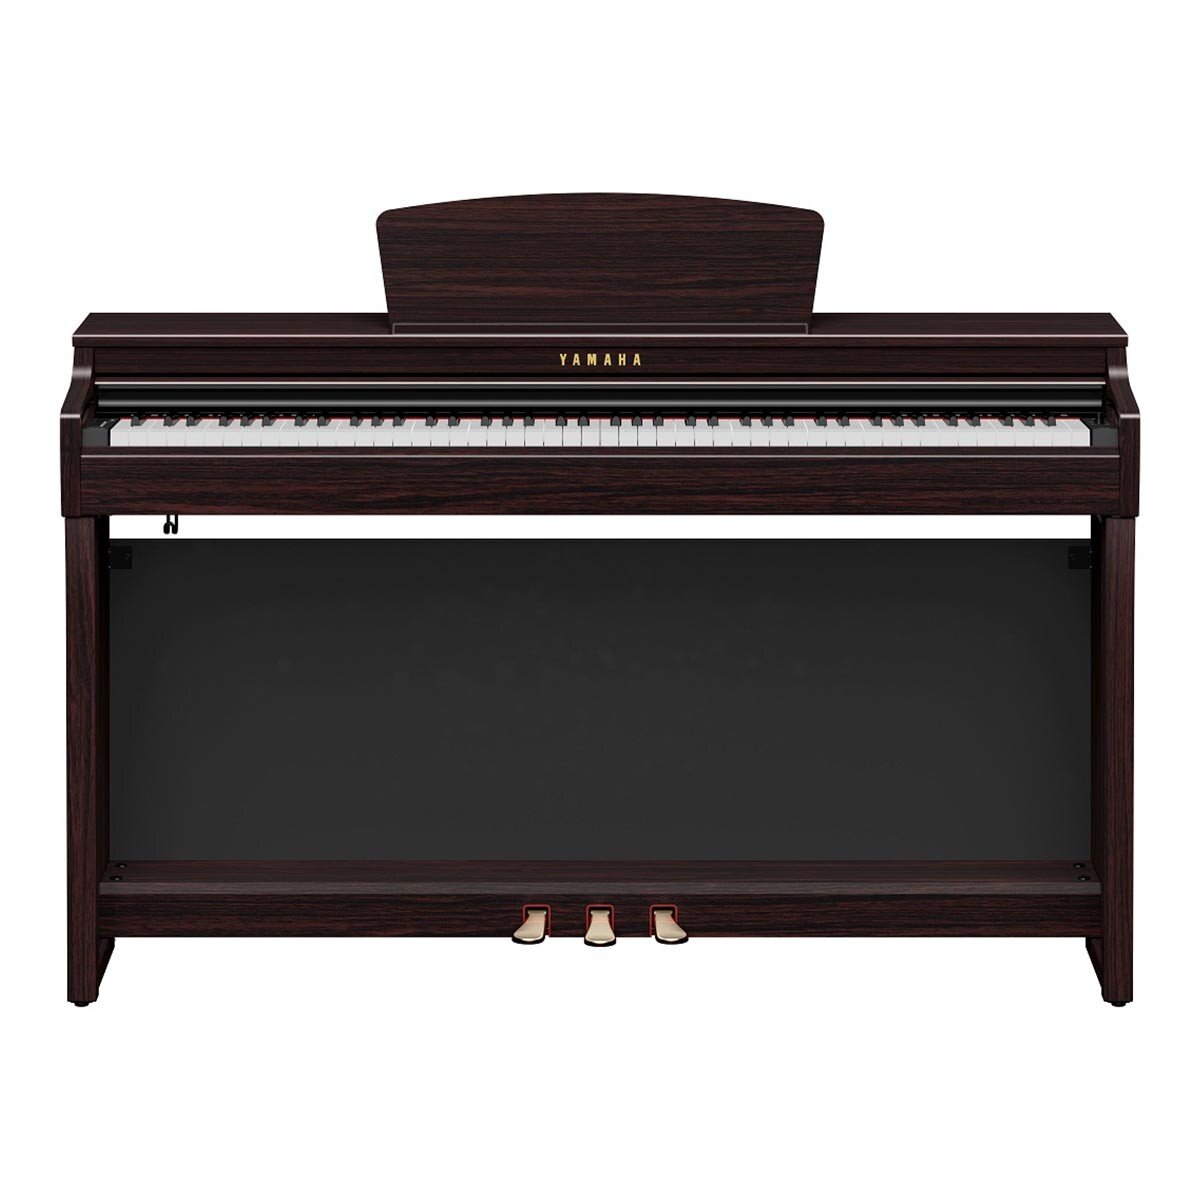 Yamaha Clavinova數位鋼琴 CLP725R 深玫瑰木色